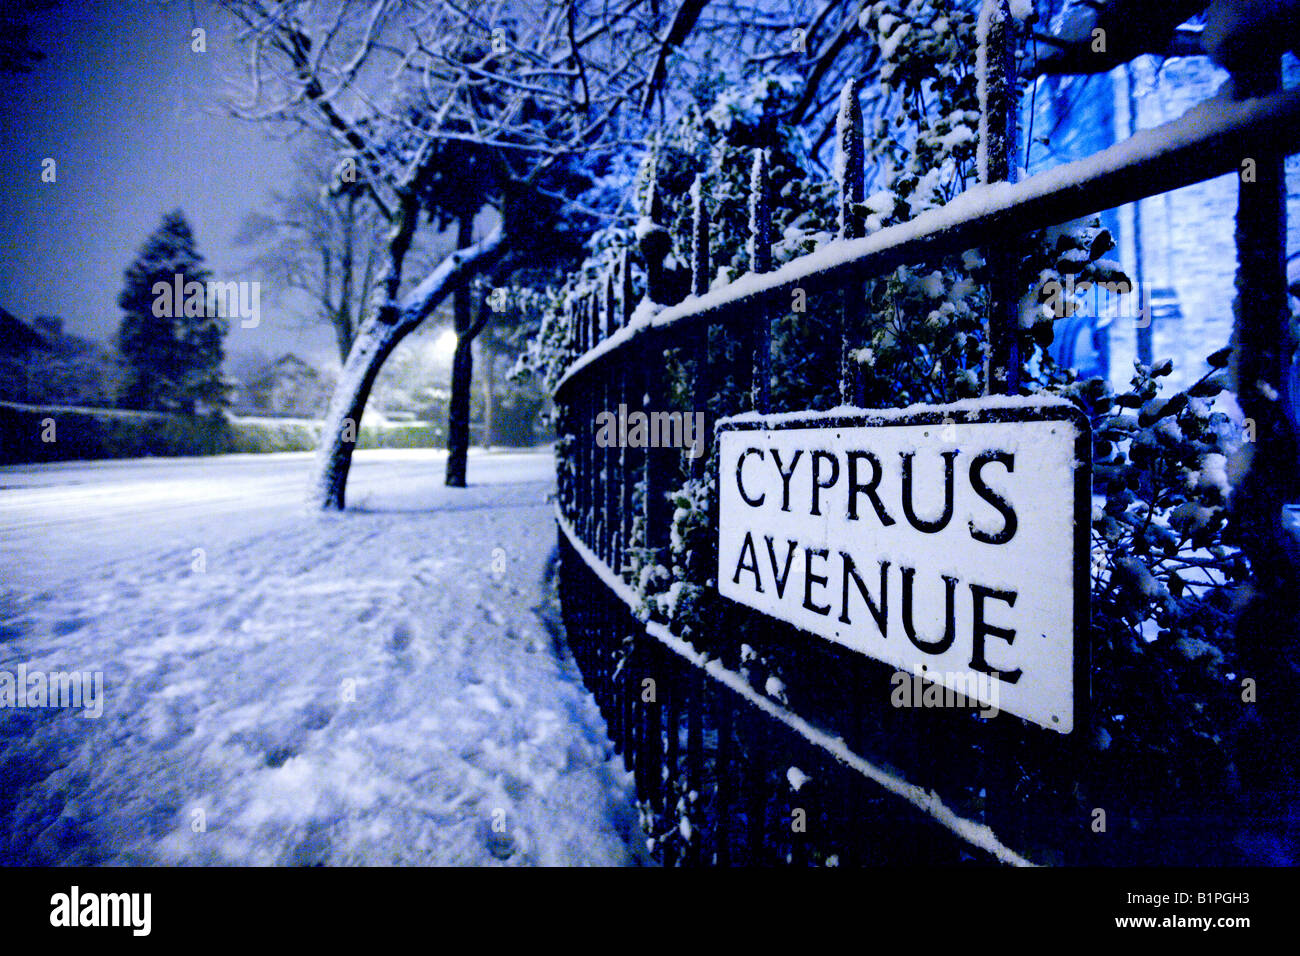 Cyprus Avenue in the snow, East Belfast, Northern Ireland Stock Photo